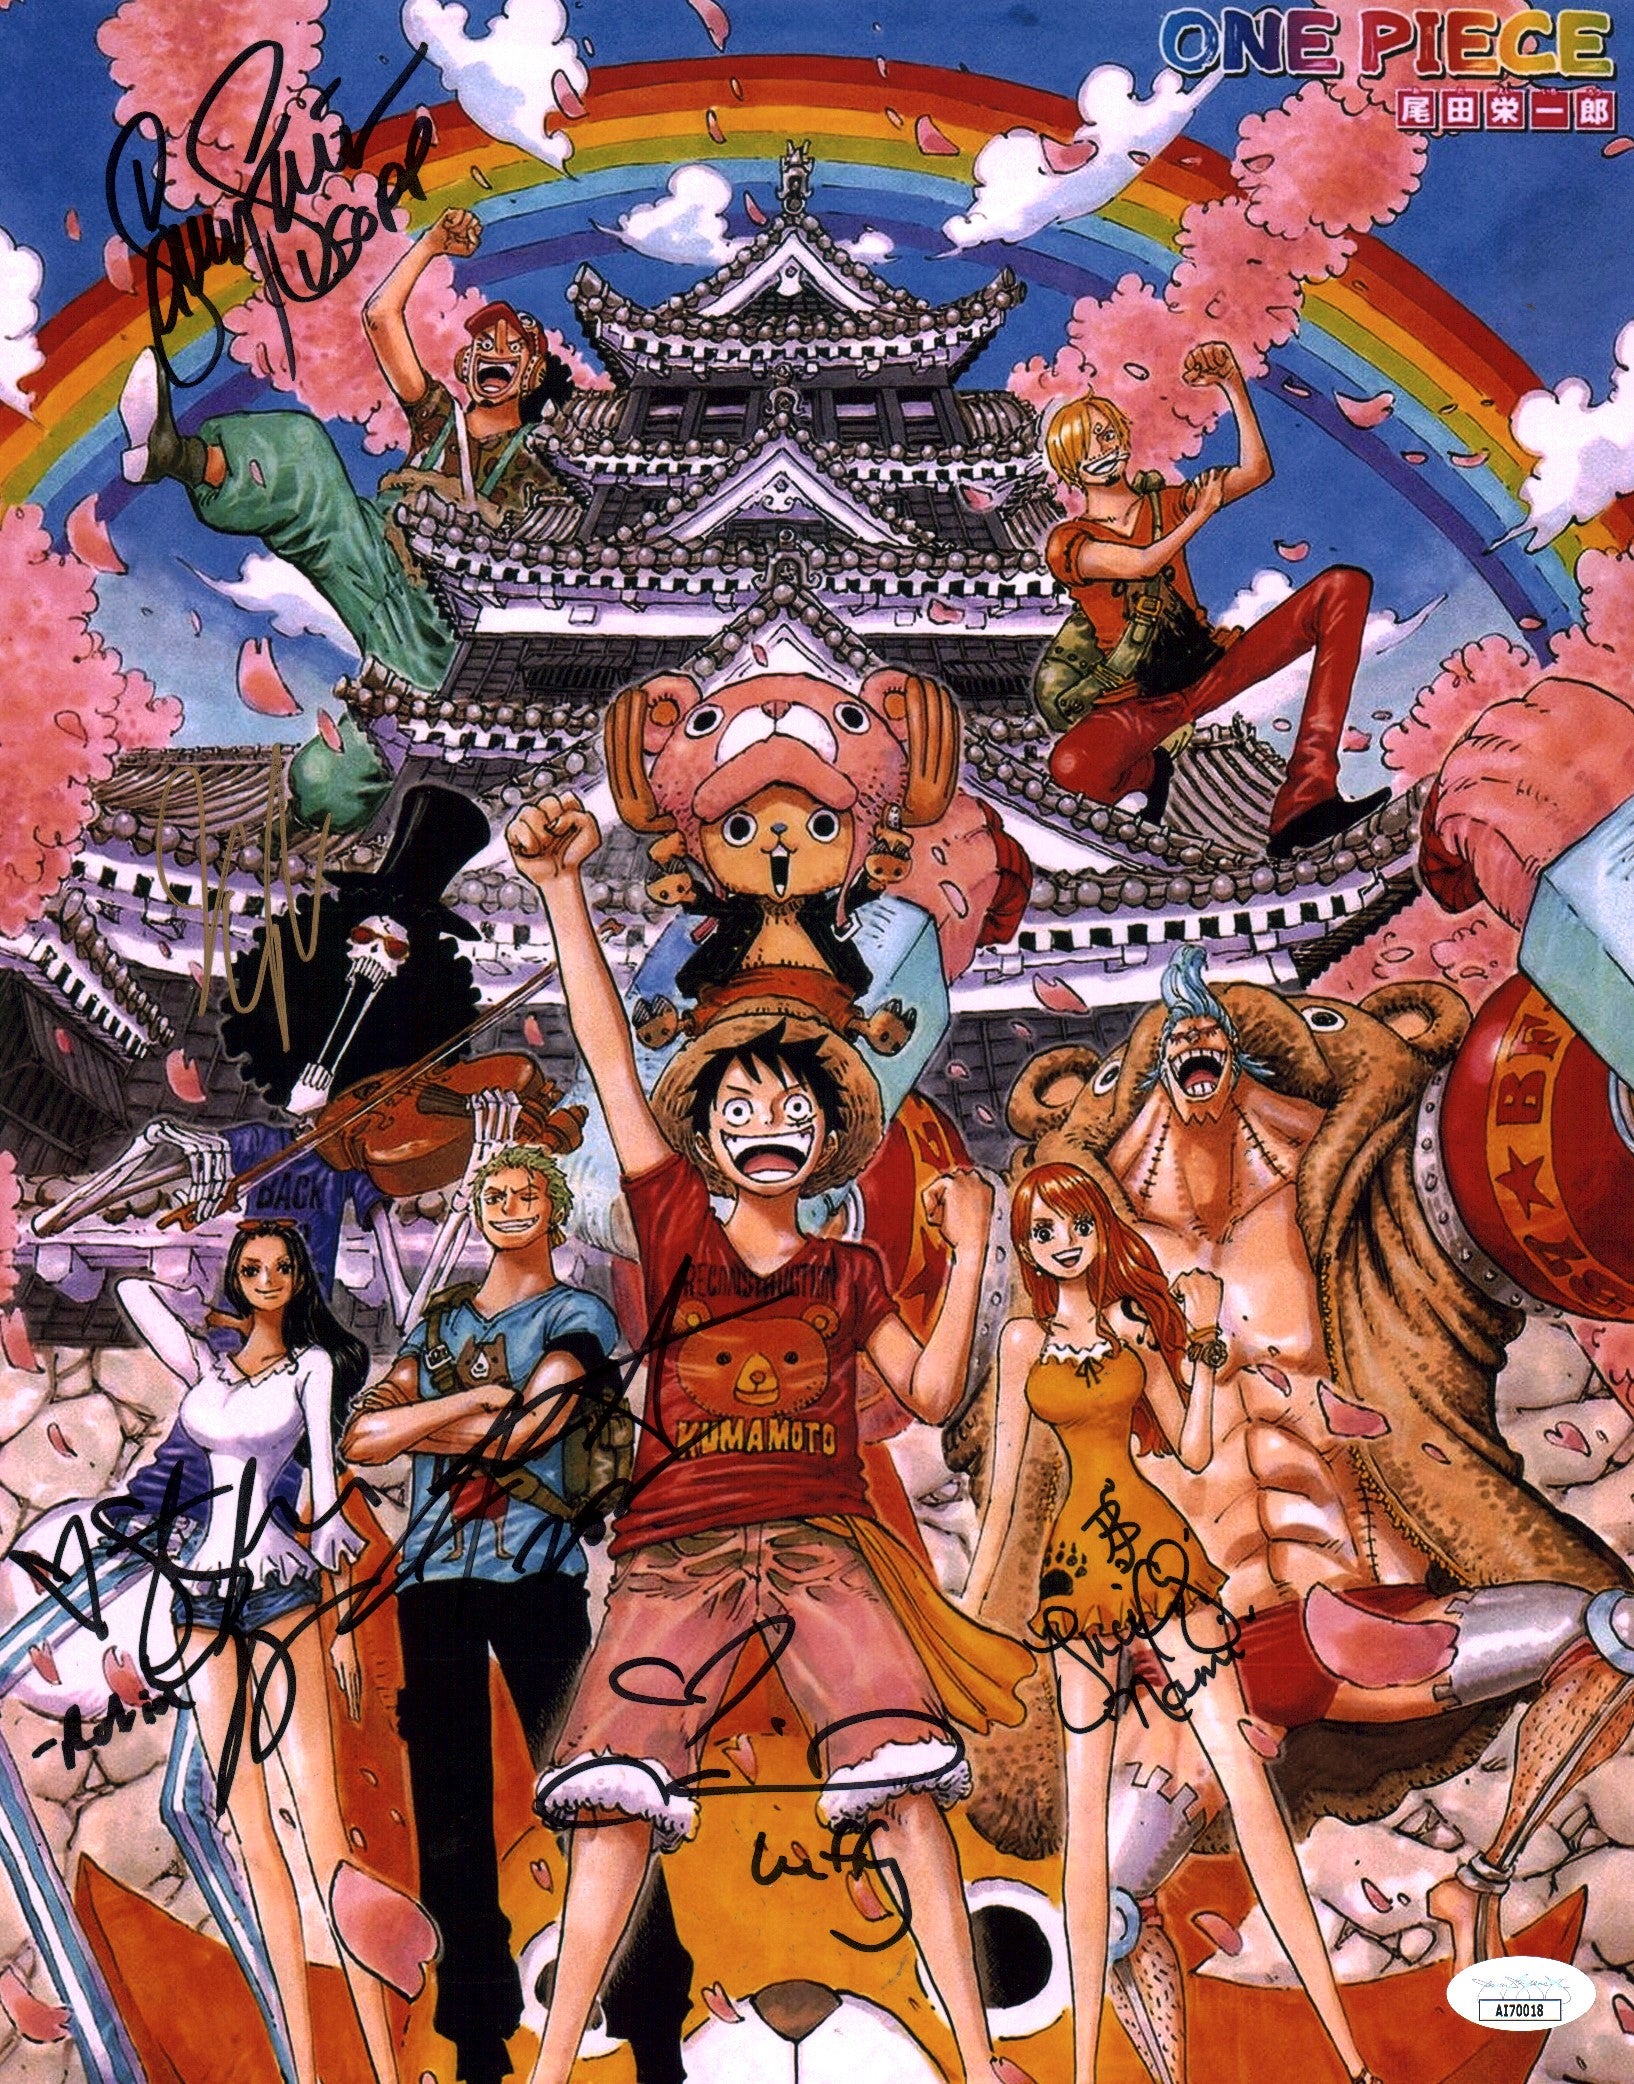 One Piece 11x14 Mini Poster Cast x6 Signed Christian, Strait, Clinkenbeard, Young, Sinclair, Sabat JSA Certified Autograph